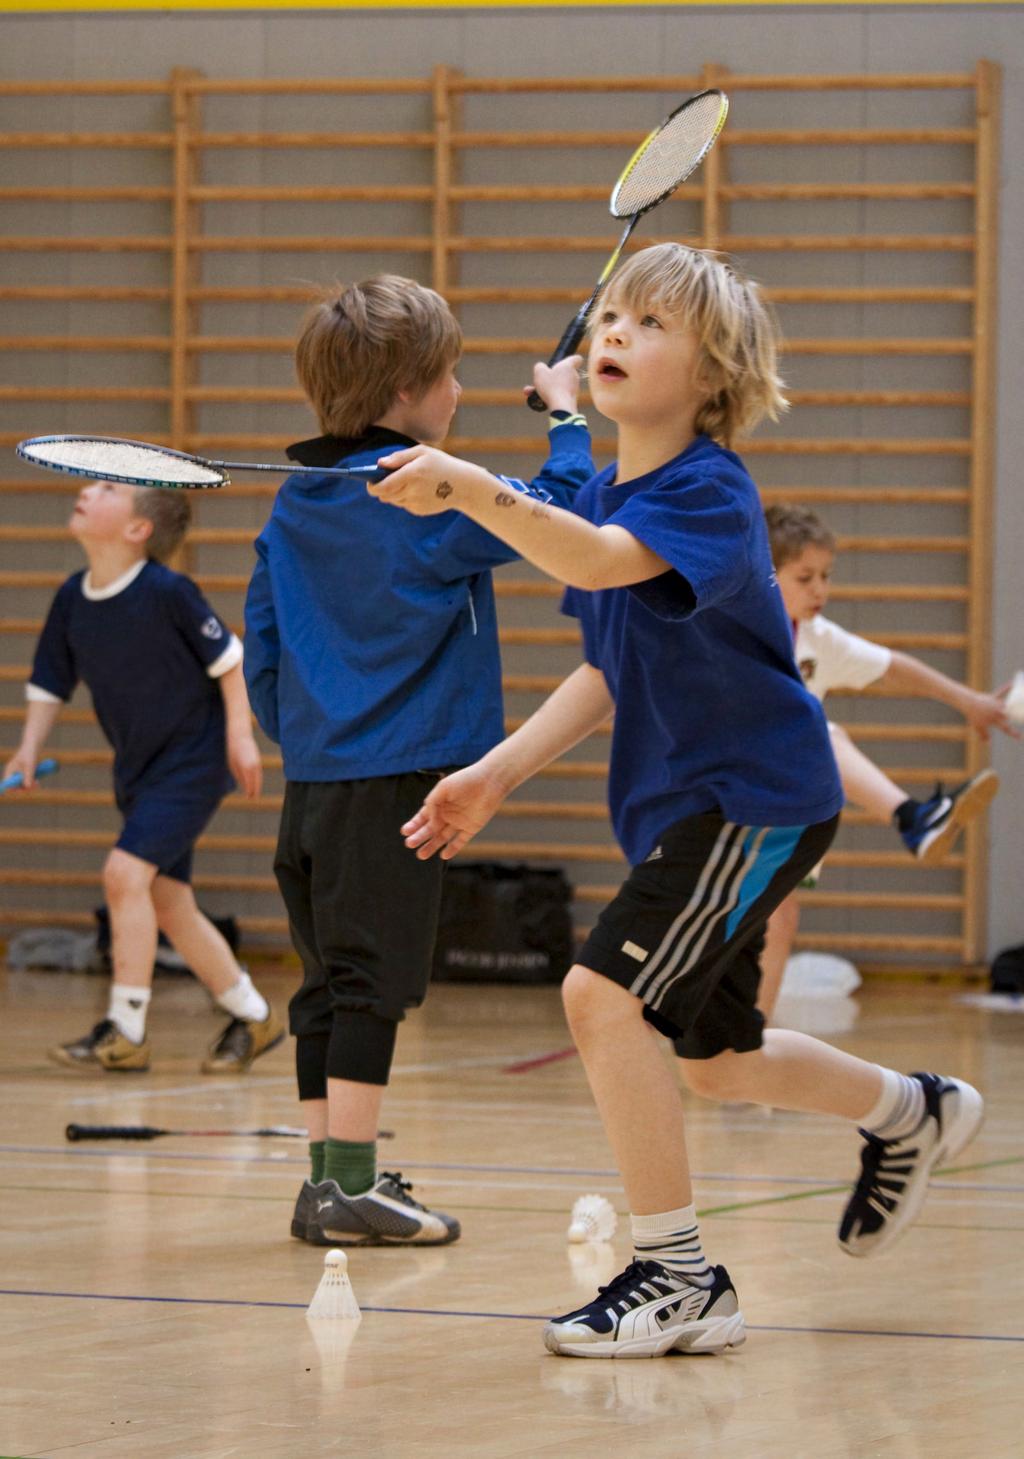 DGI Badminton Sæt badminton på skoleskemaet!